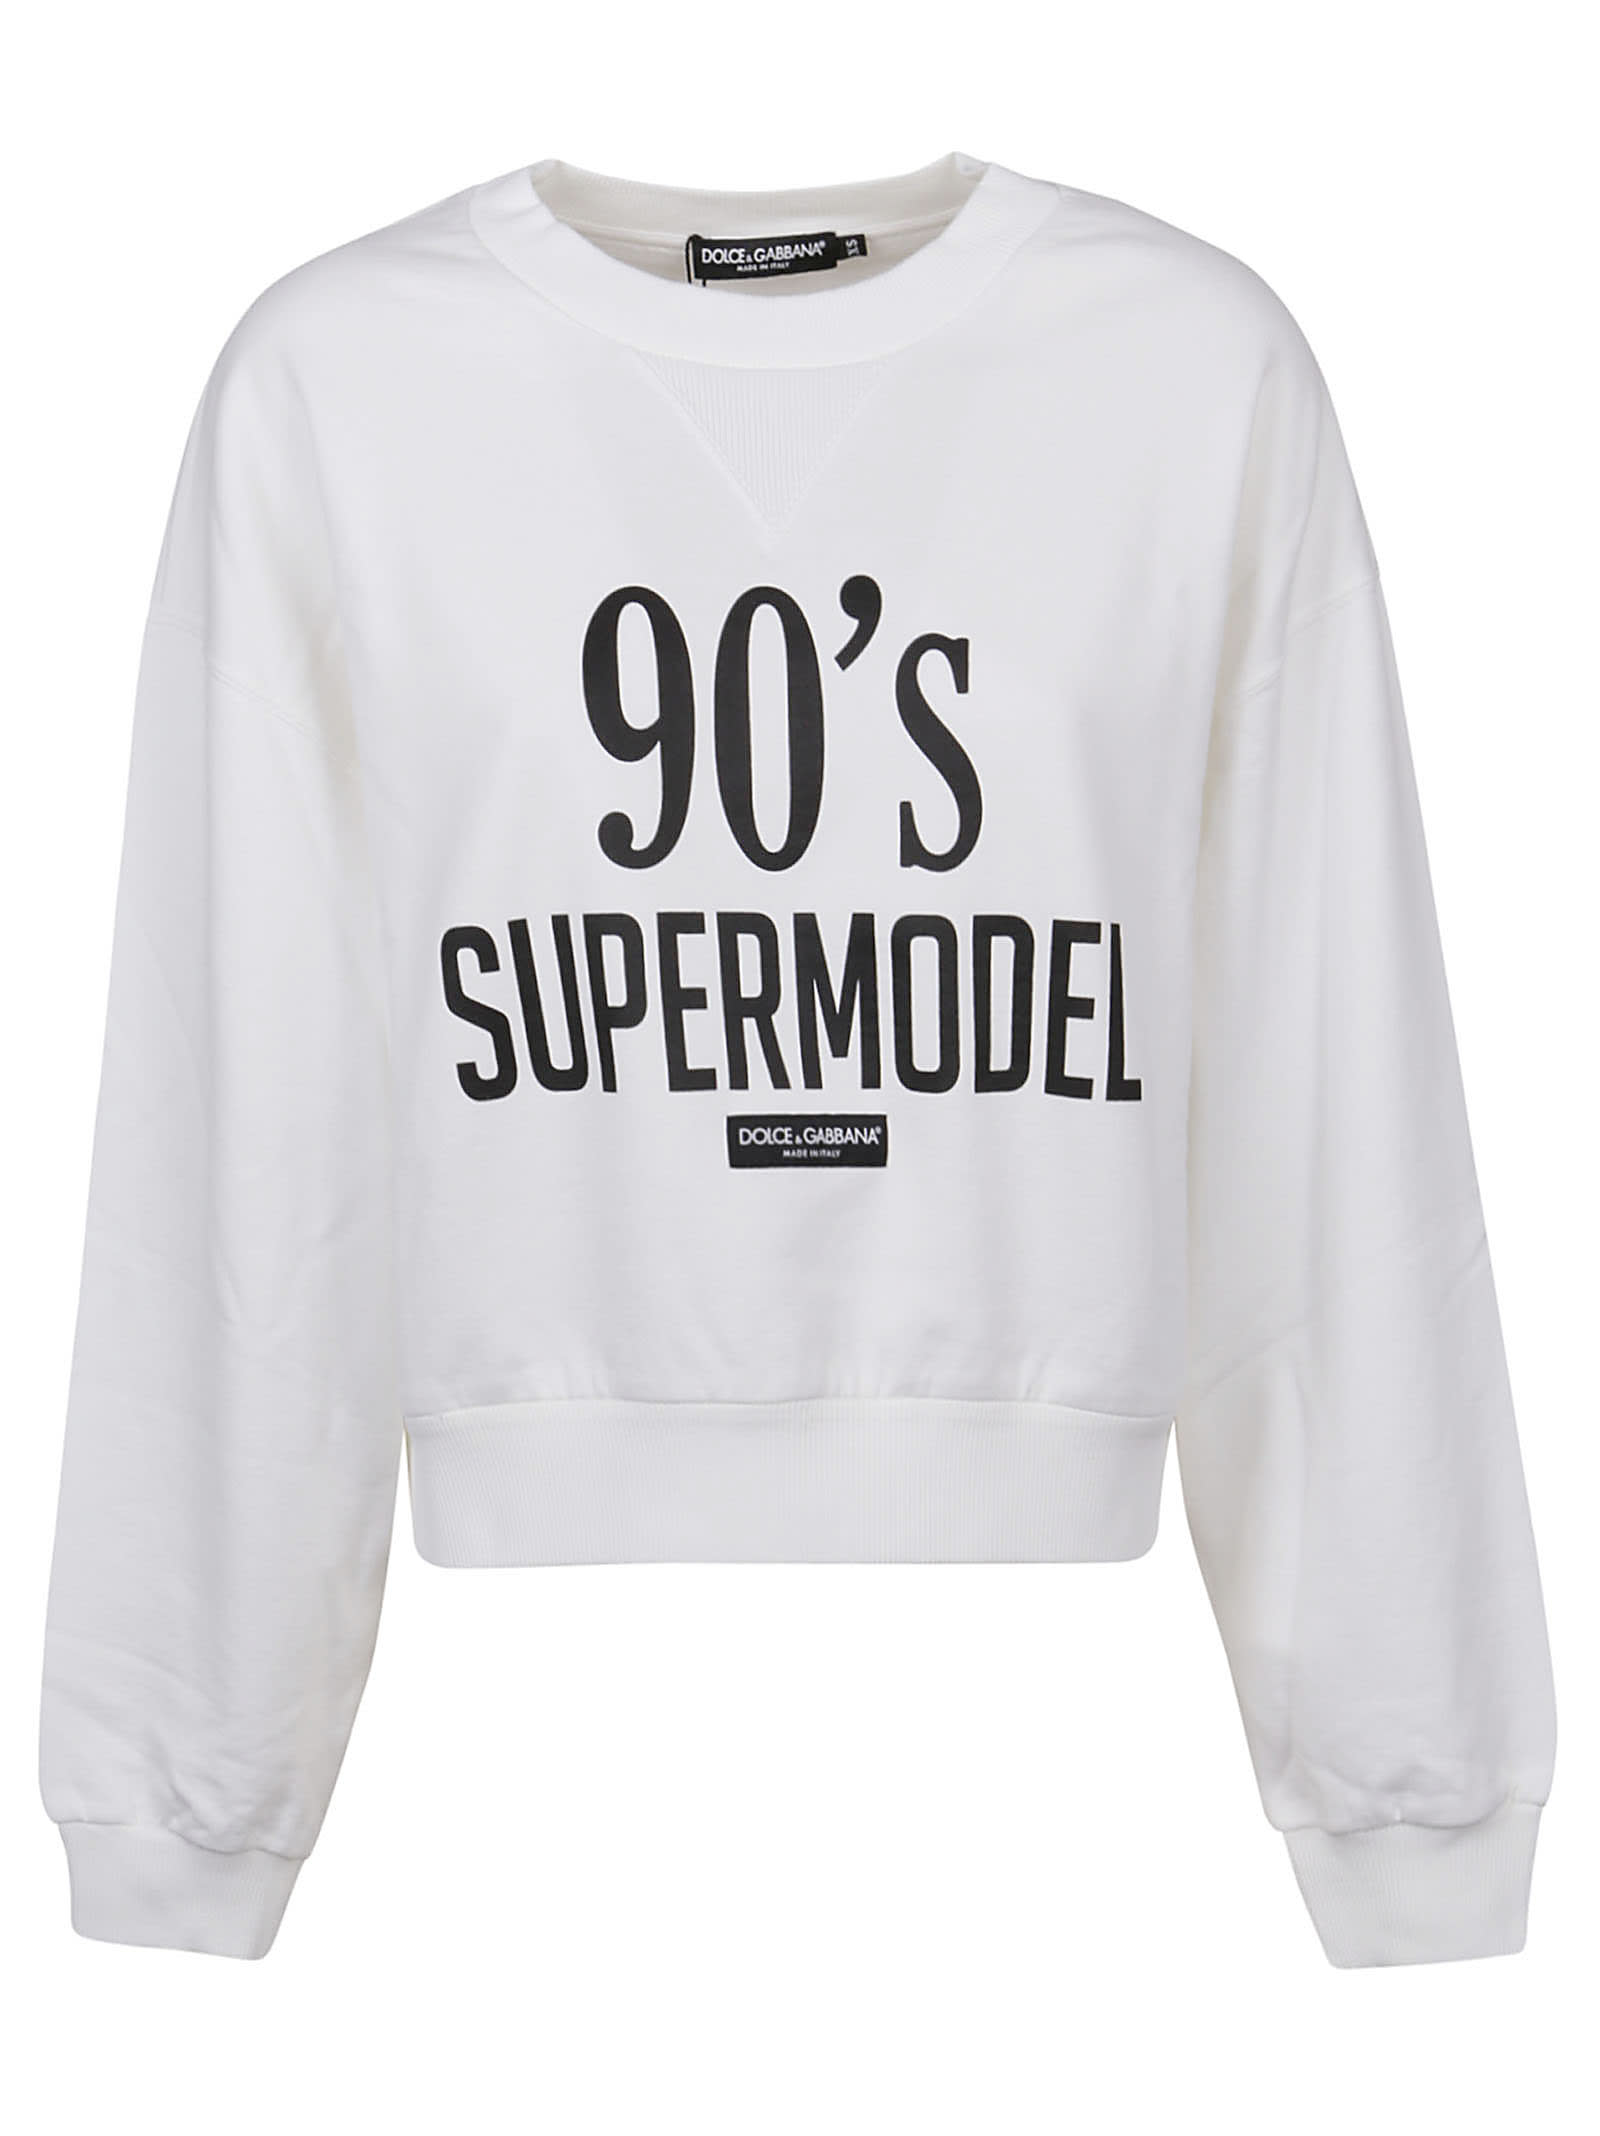 Dolce & Gabbana 90s Supermodel Sweatshirt